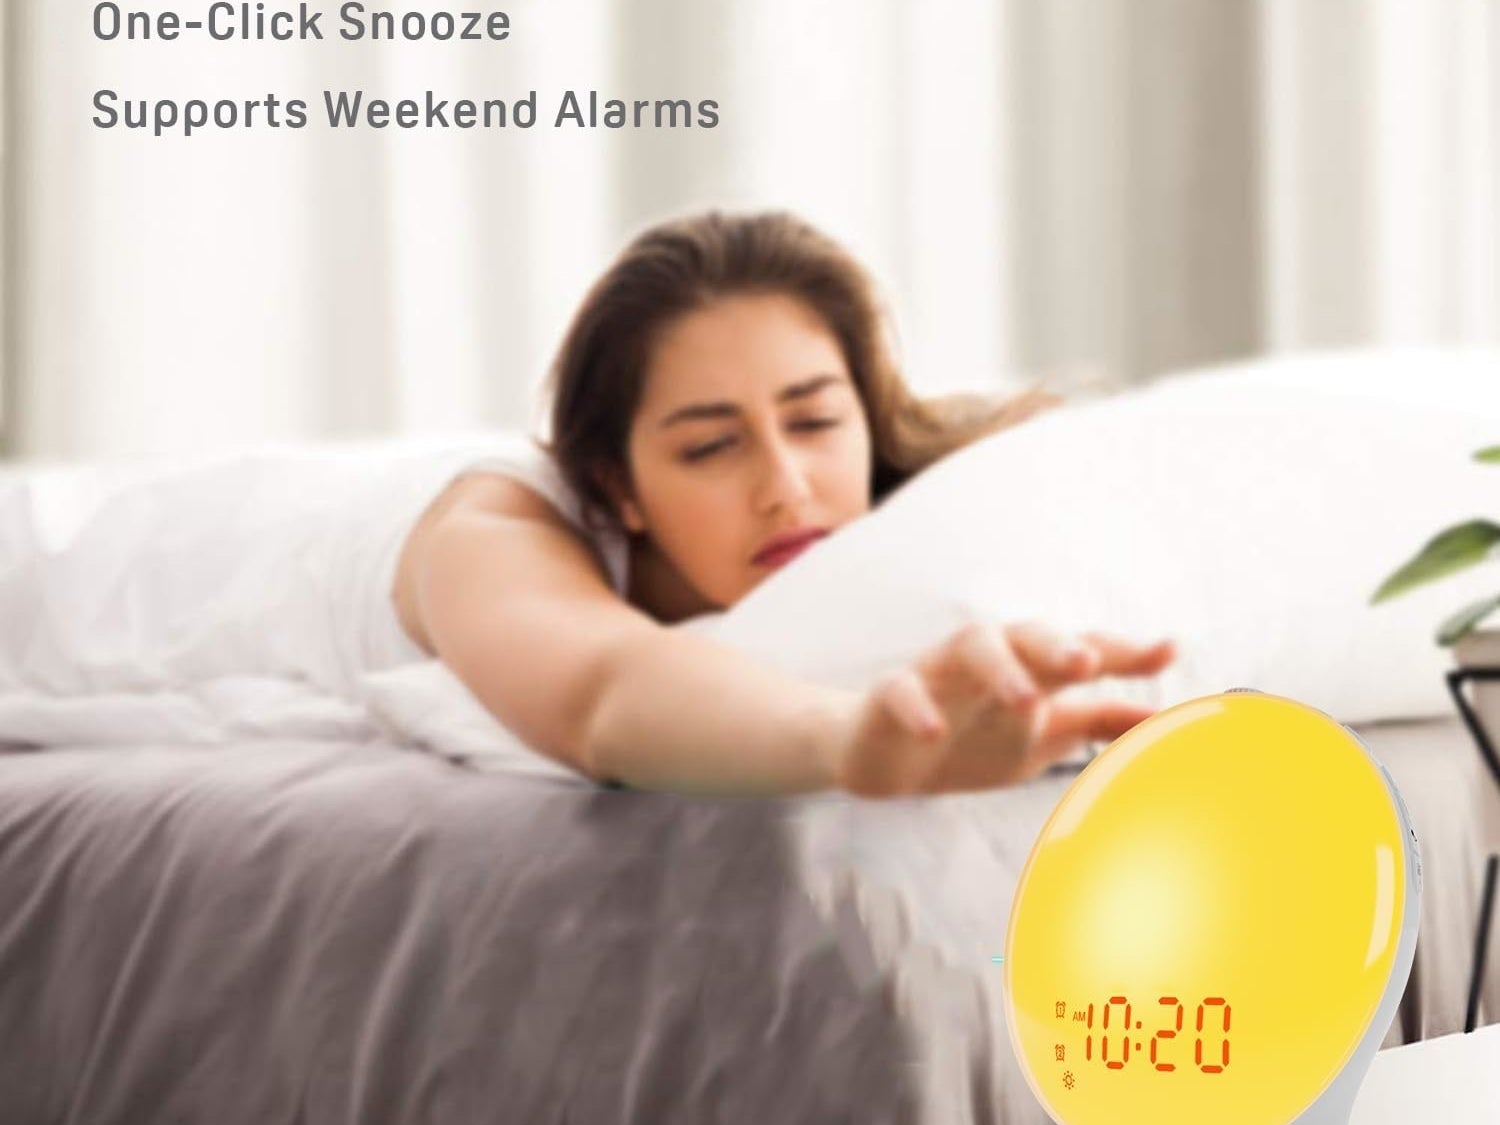 a woman reaching for a sunlight alarm clock